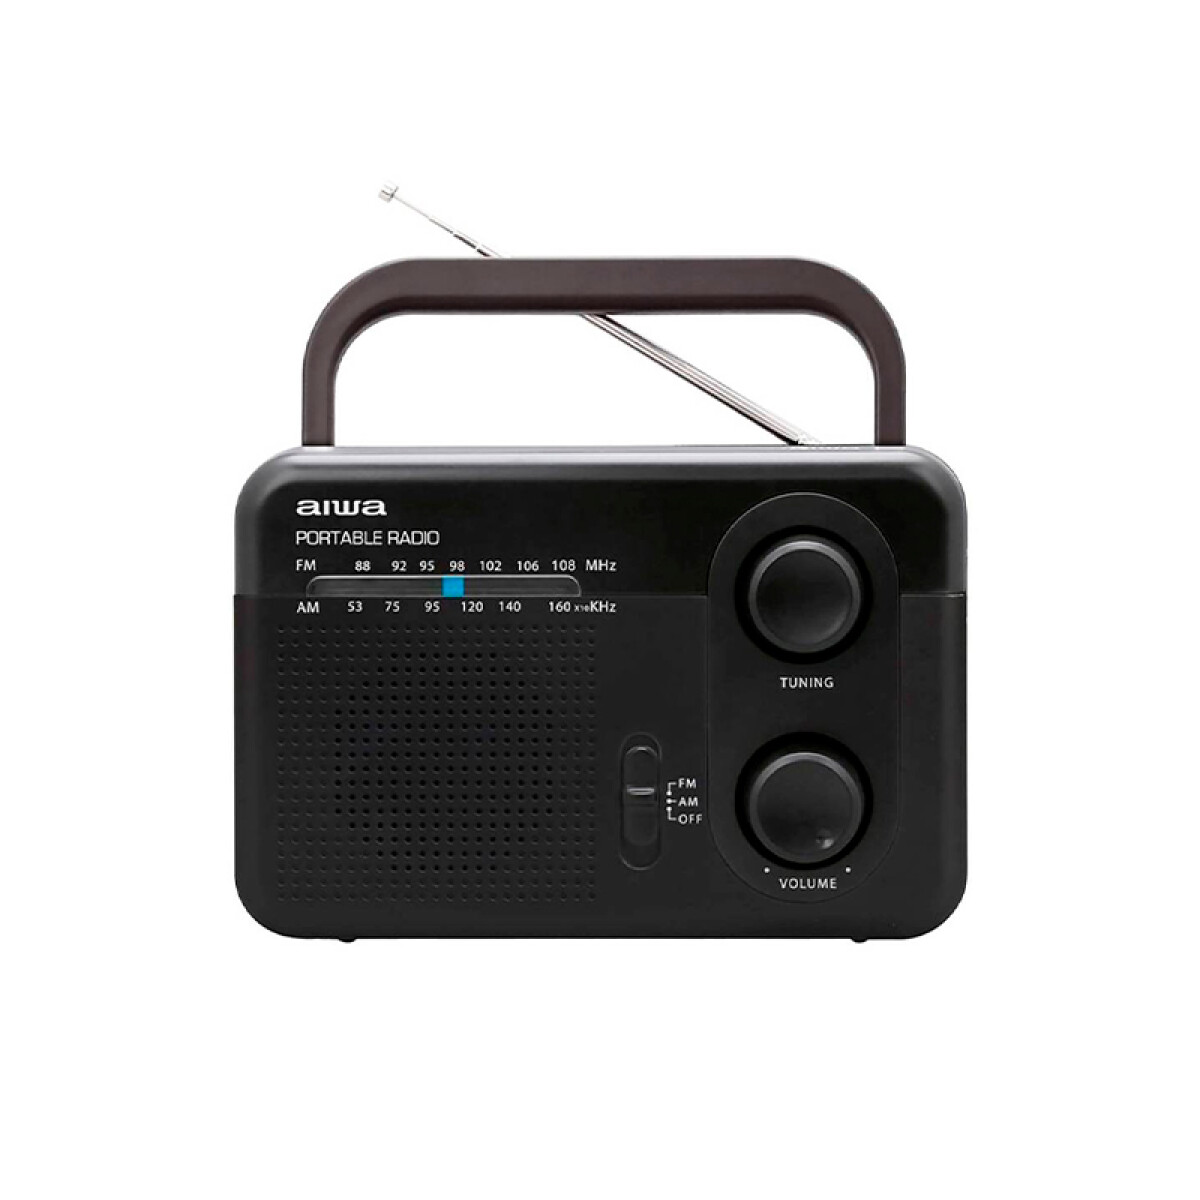 Radio Portátil Aiwa analoga AM-FM - Unica 